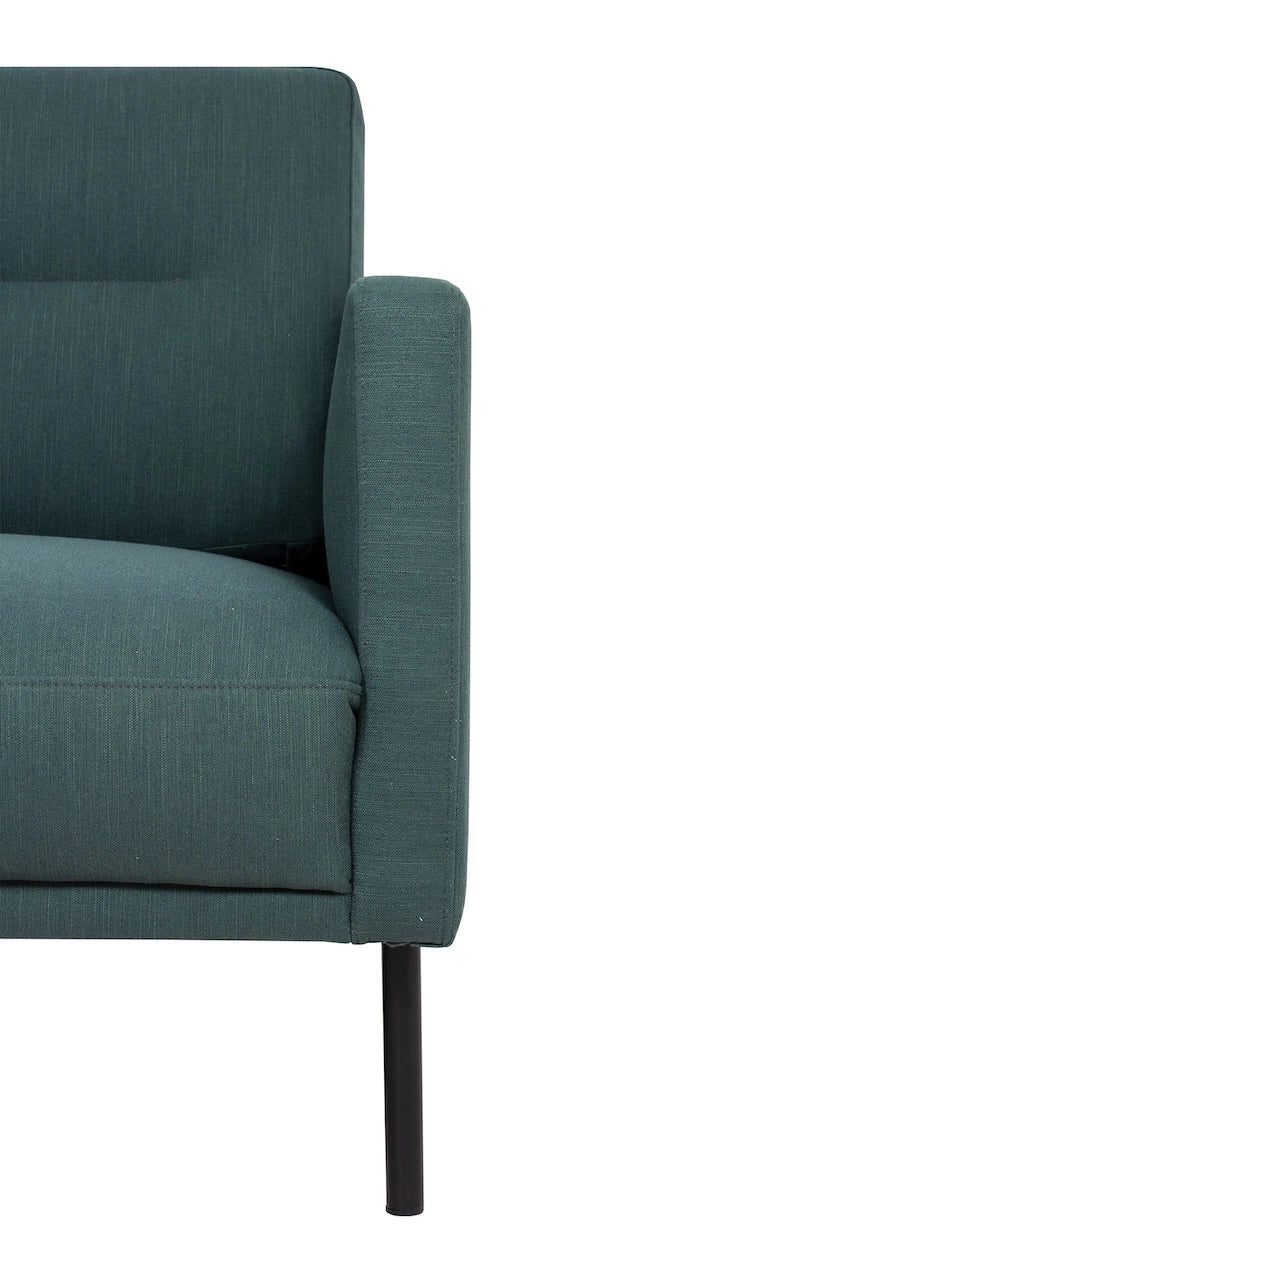 Furniture To Go Larvik 3 Seater Sofa - Dark Green, Black Legs